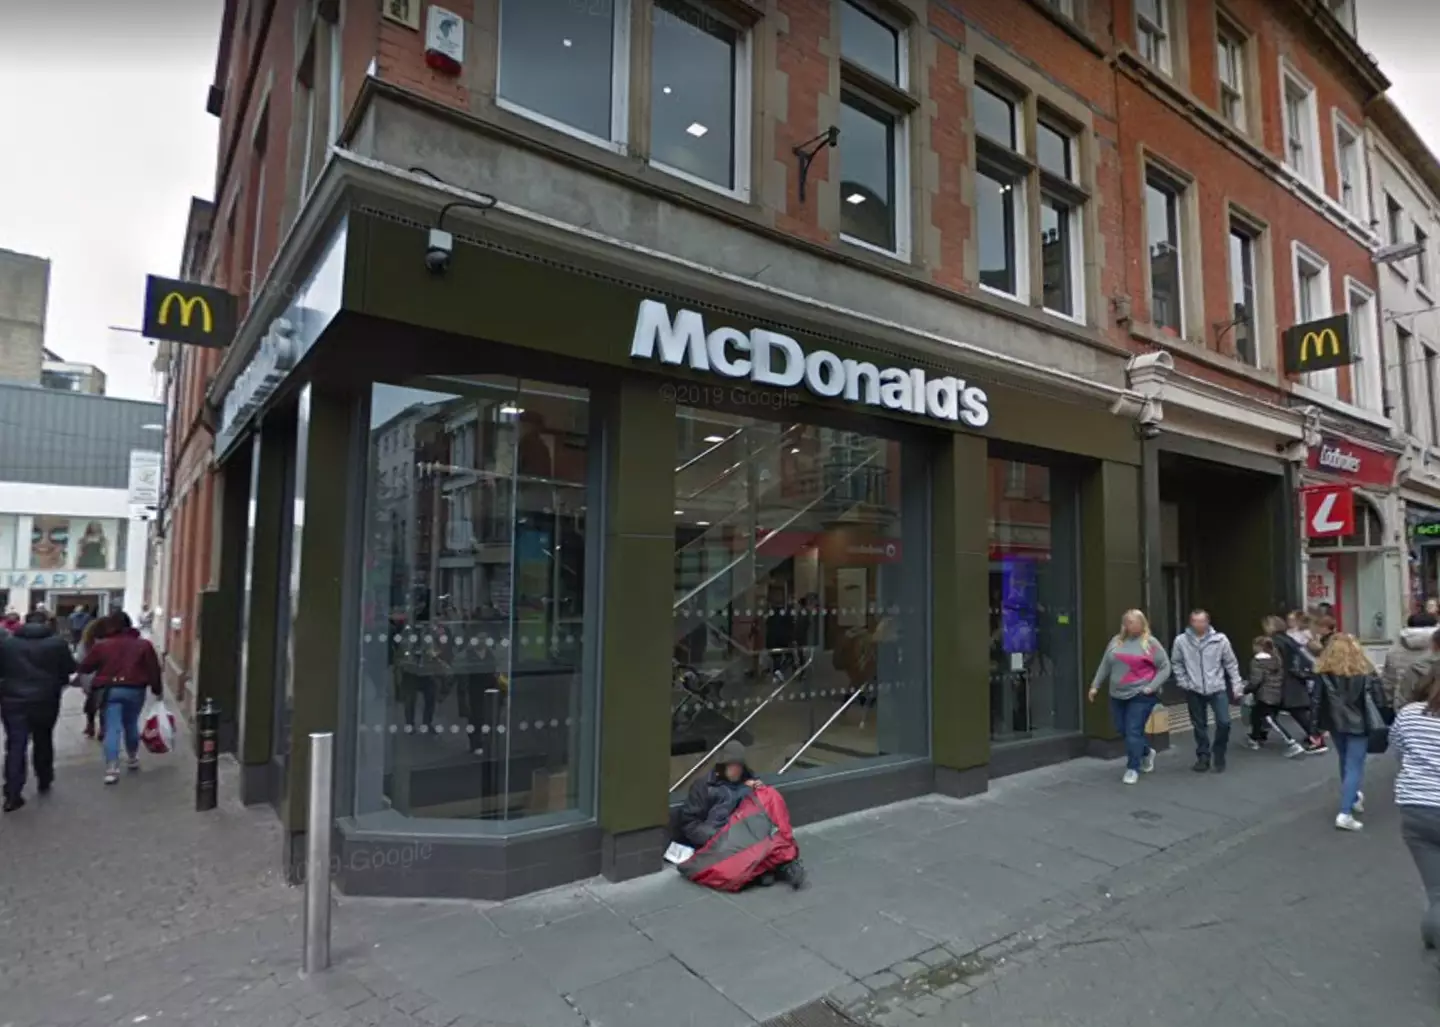 McDonald's on Clumber Street.